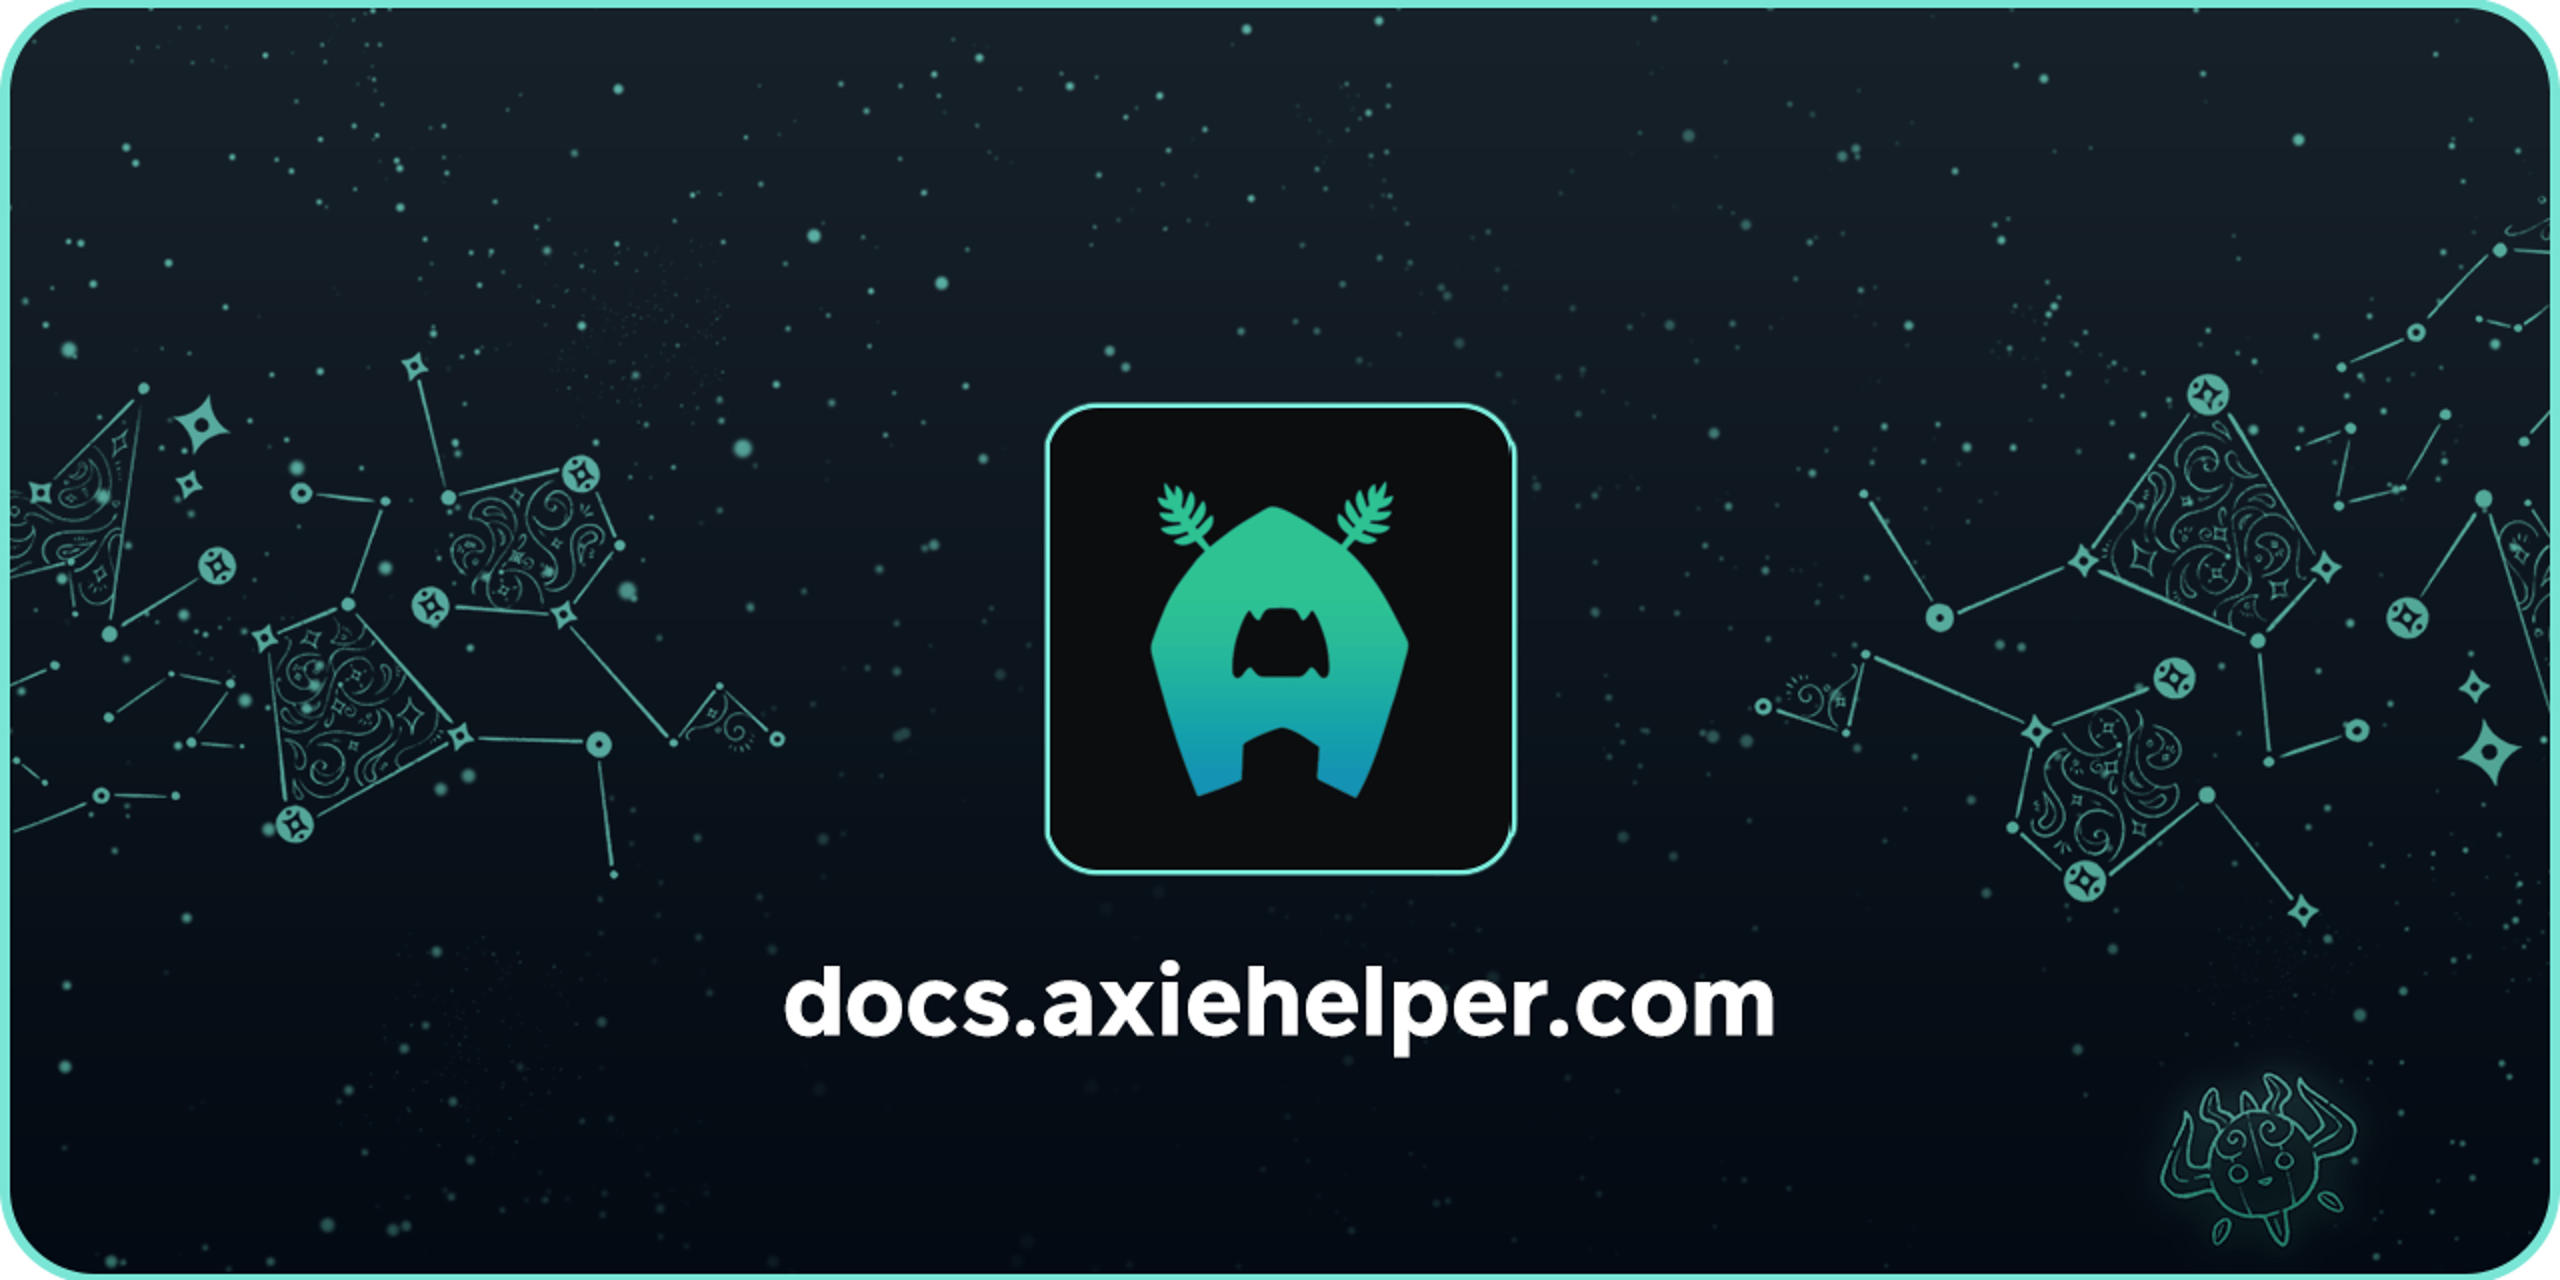 leaderboard - AxieHelper